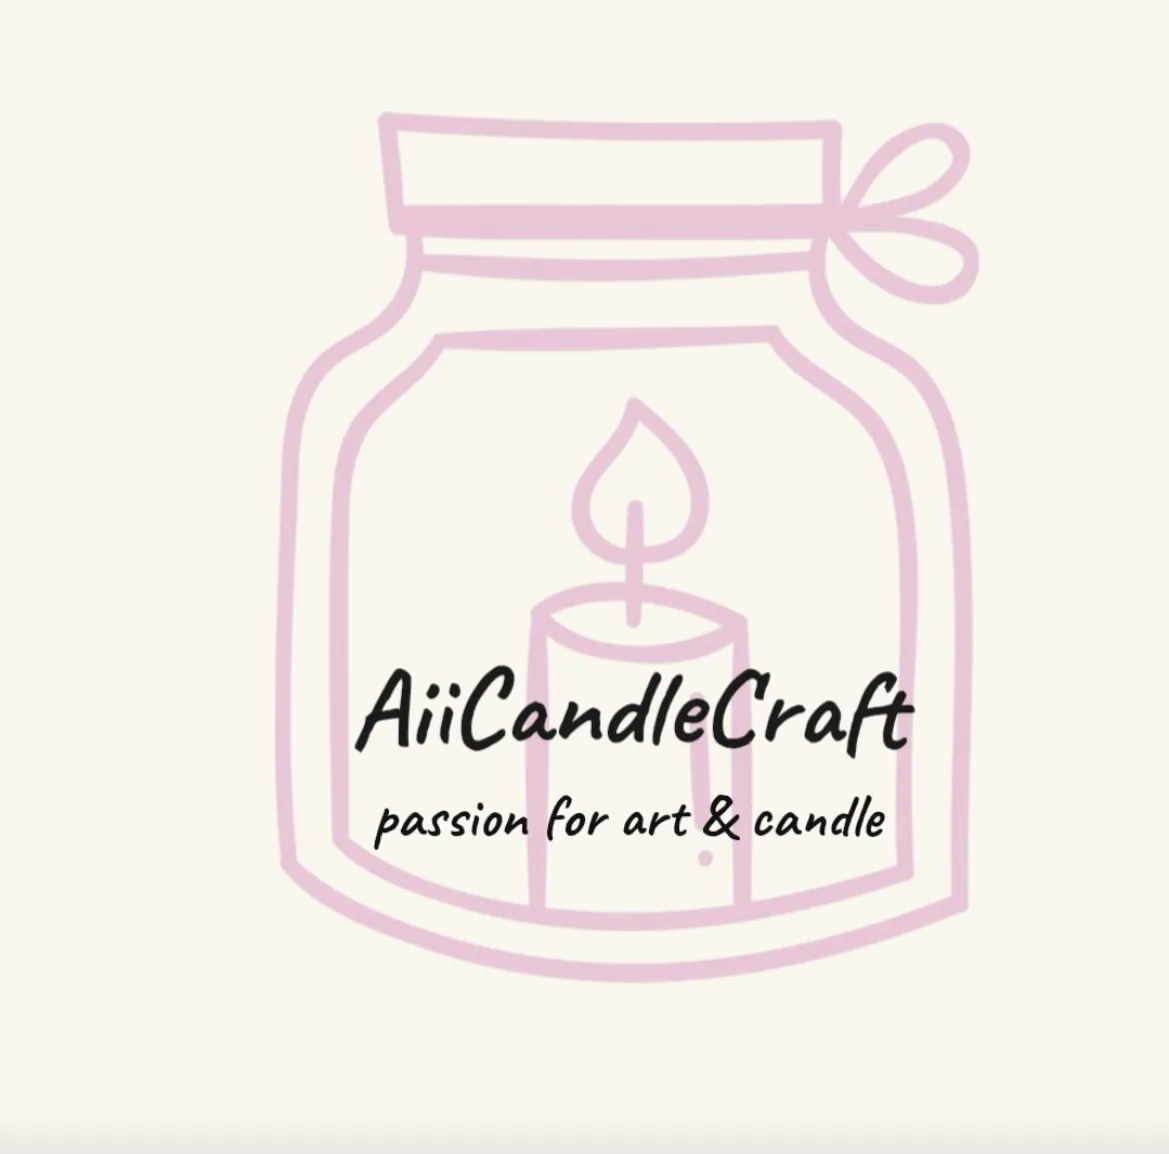  Aii Candle Craft 